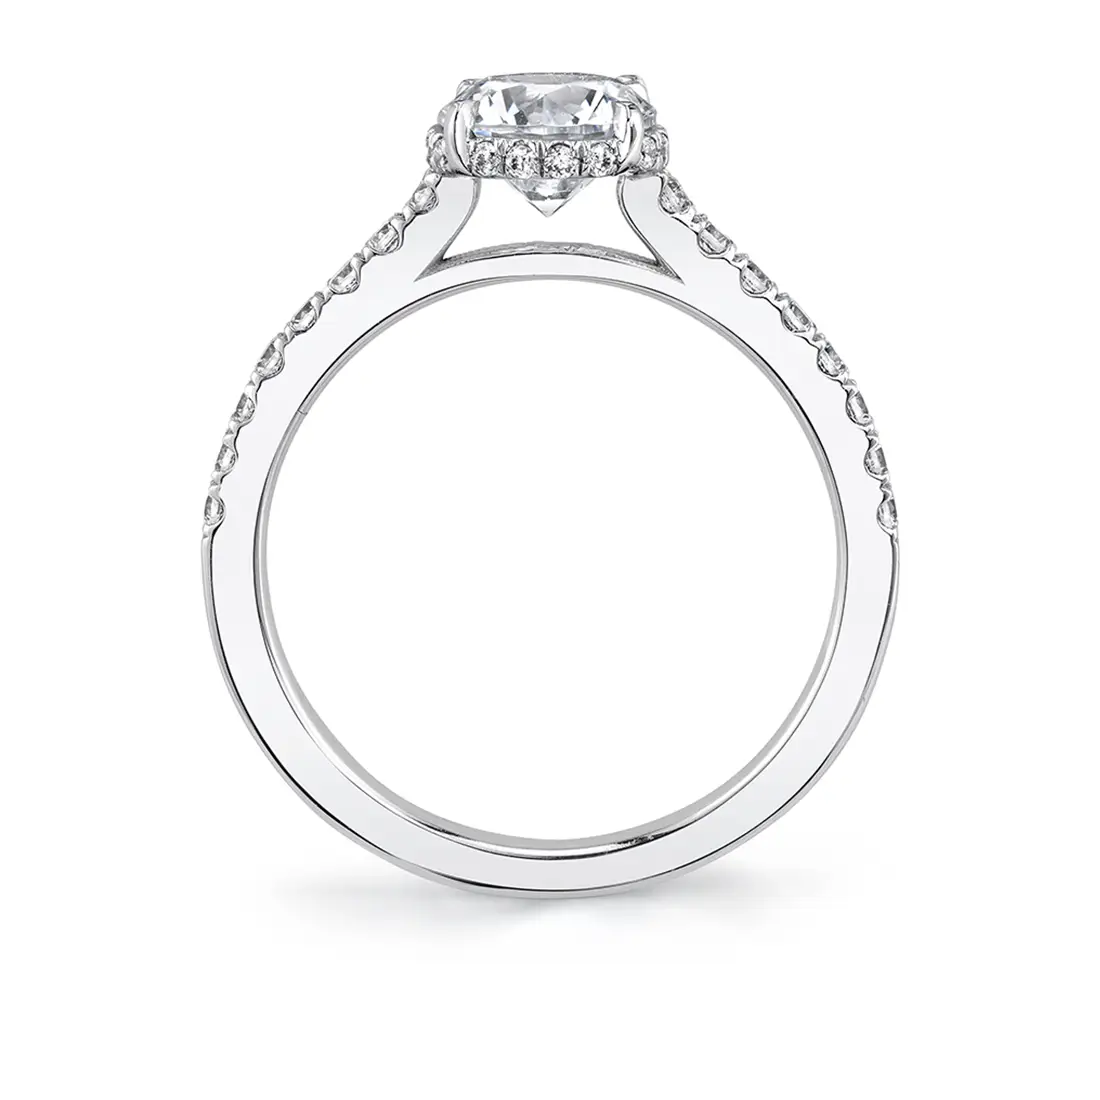 Profile Image of a Hidden Halo Ring - Anastasia